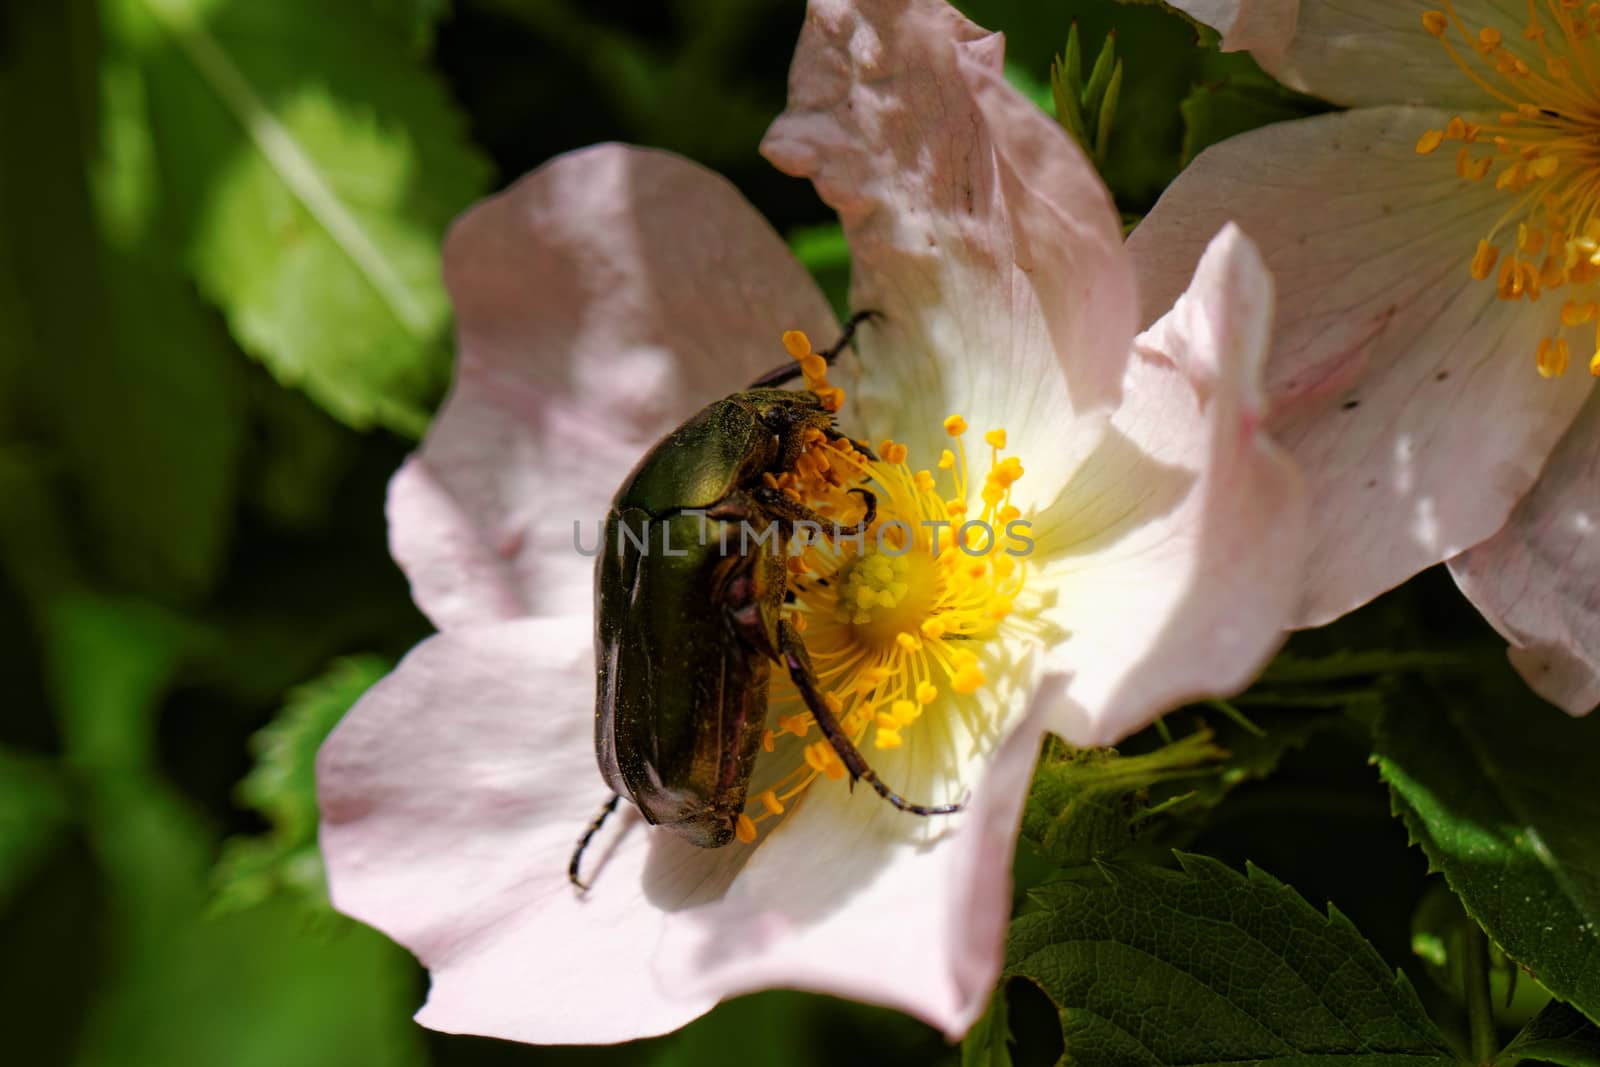 Protaetia fieberi specie of Beetle by NagyDodo